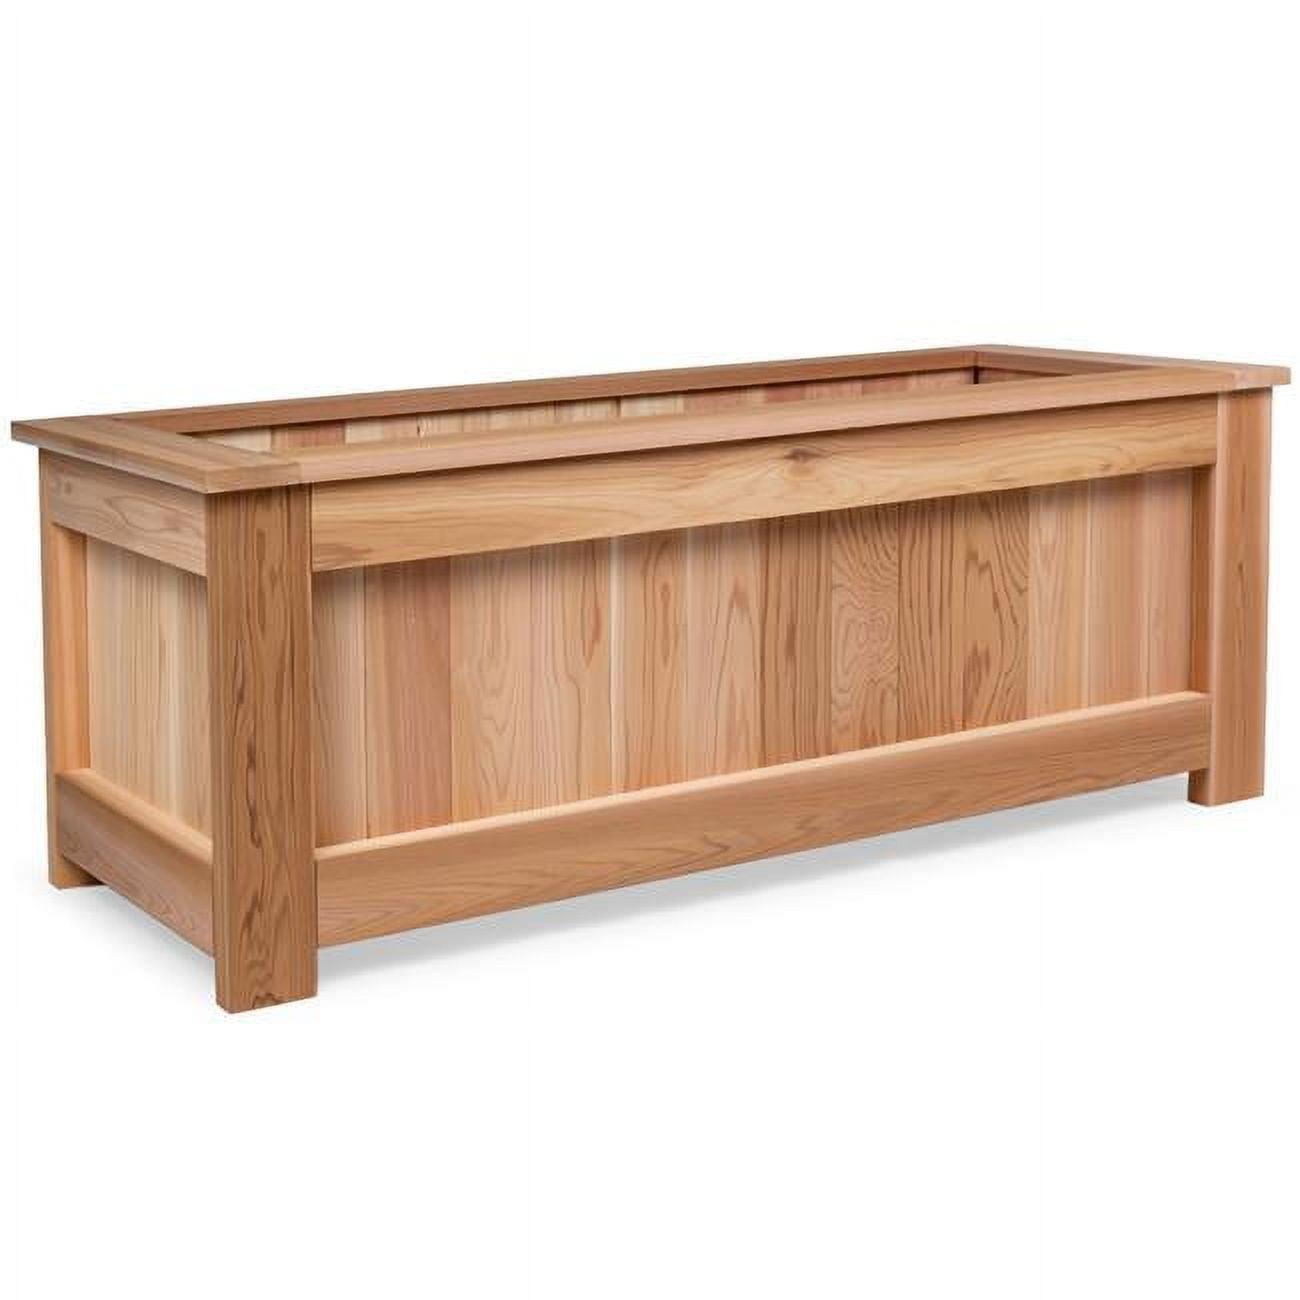 Elegant Cedar 4-Foot Planter Box for Outdoor & Indoor Spaces